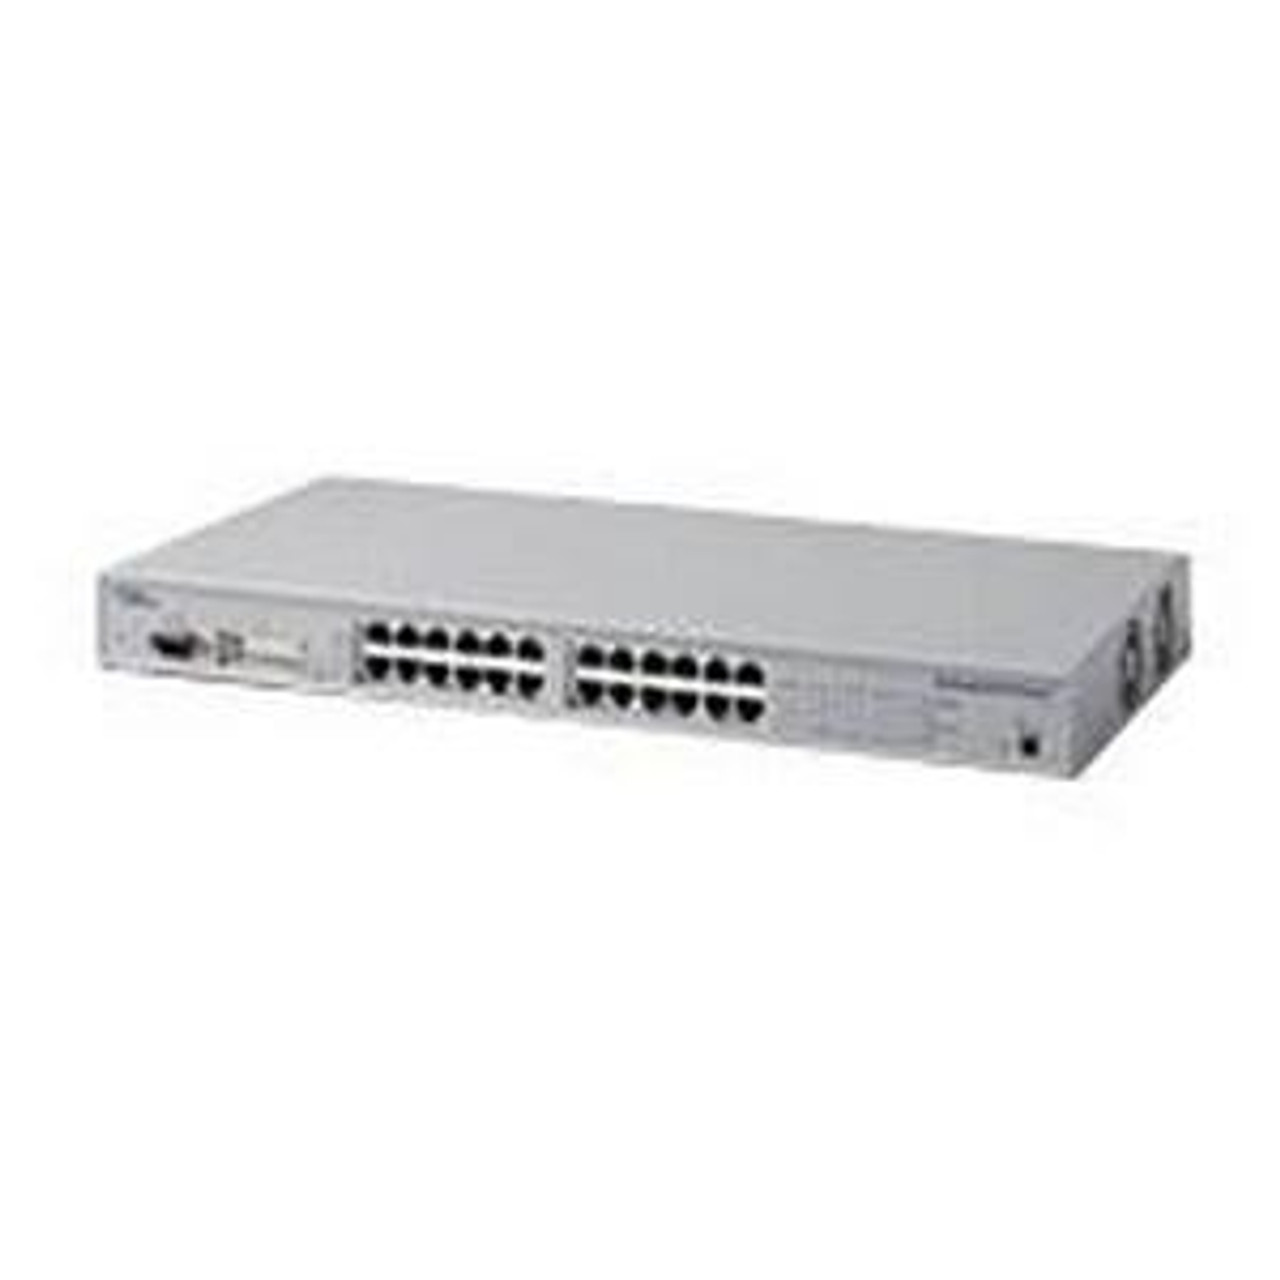 AL2012B39 Nortel Baystack 420-24T 24-Ports 10/100Base-TX SFP Stackable FastEnet Switch (Refurbished)